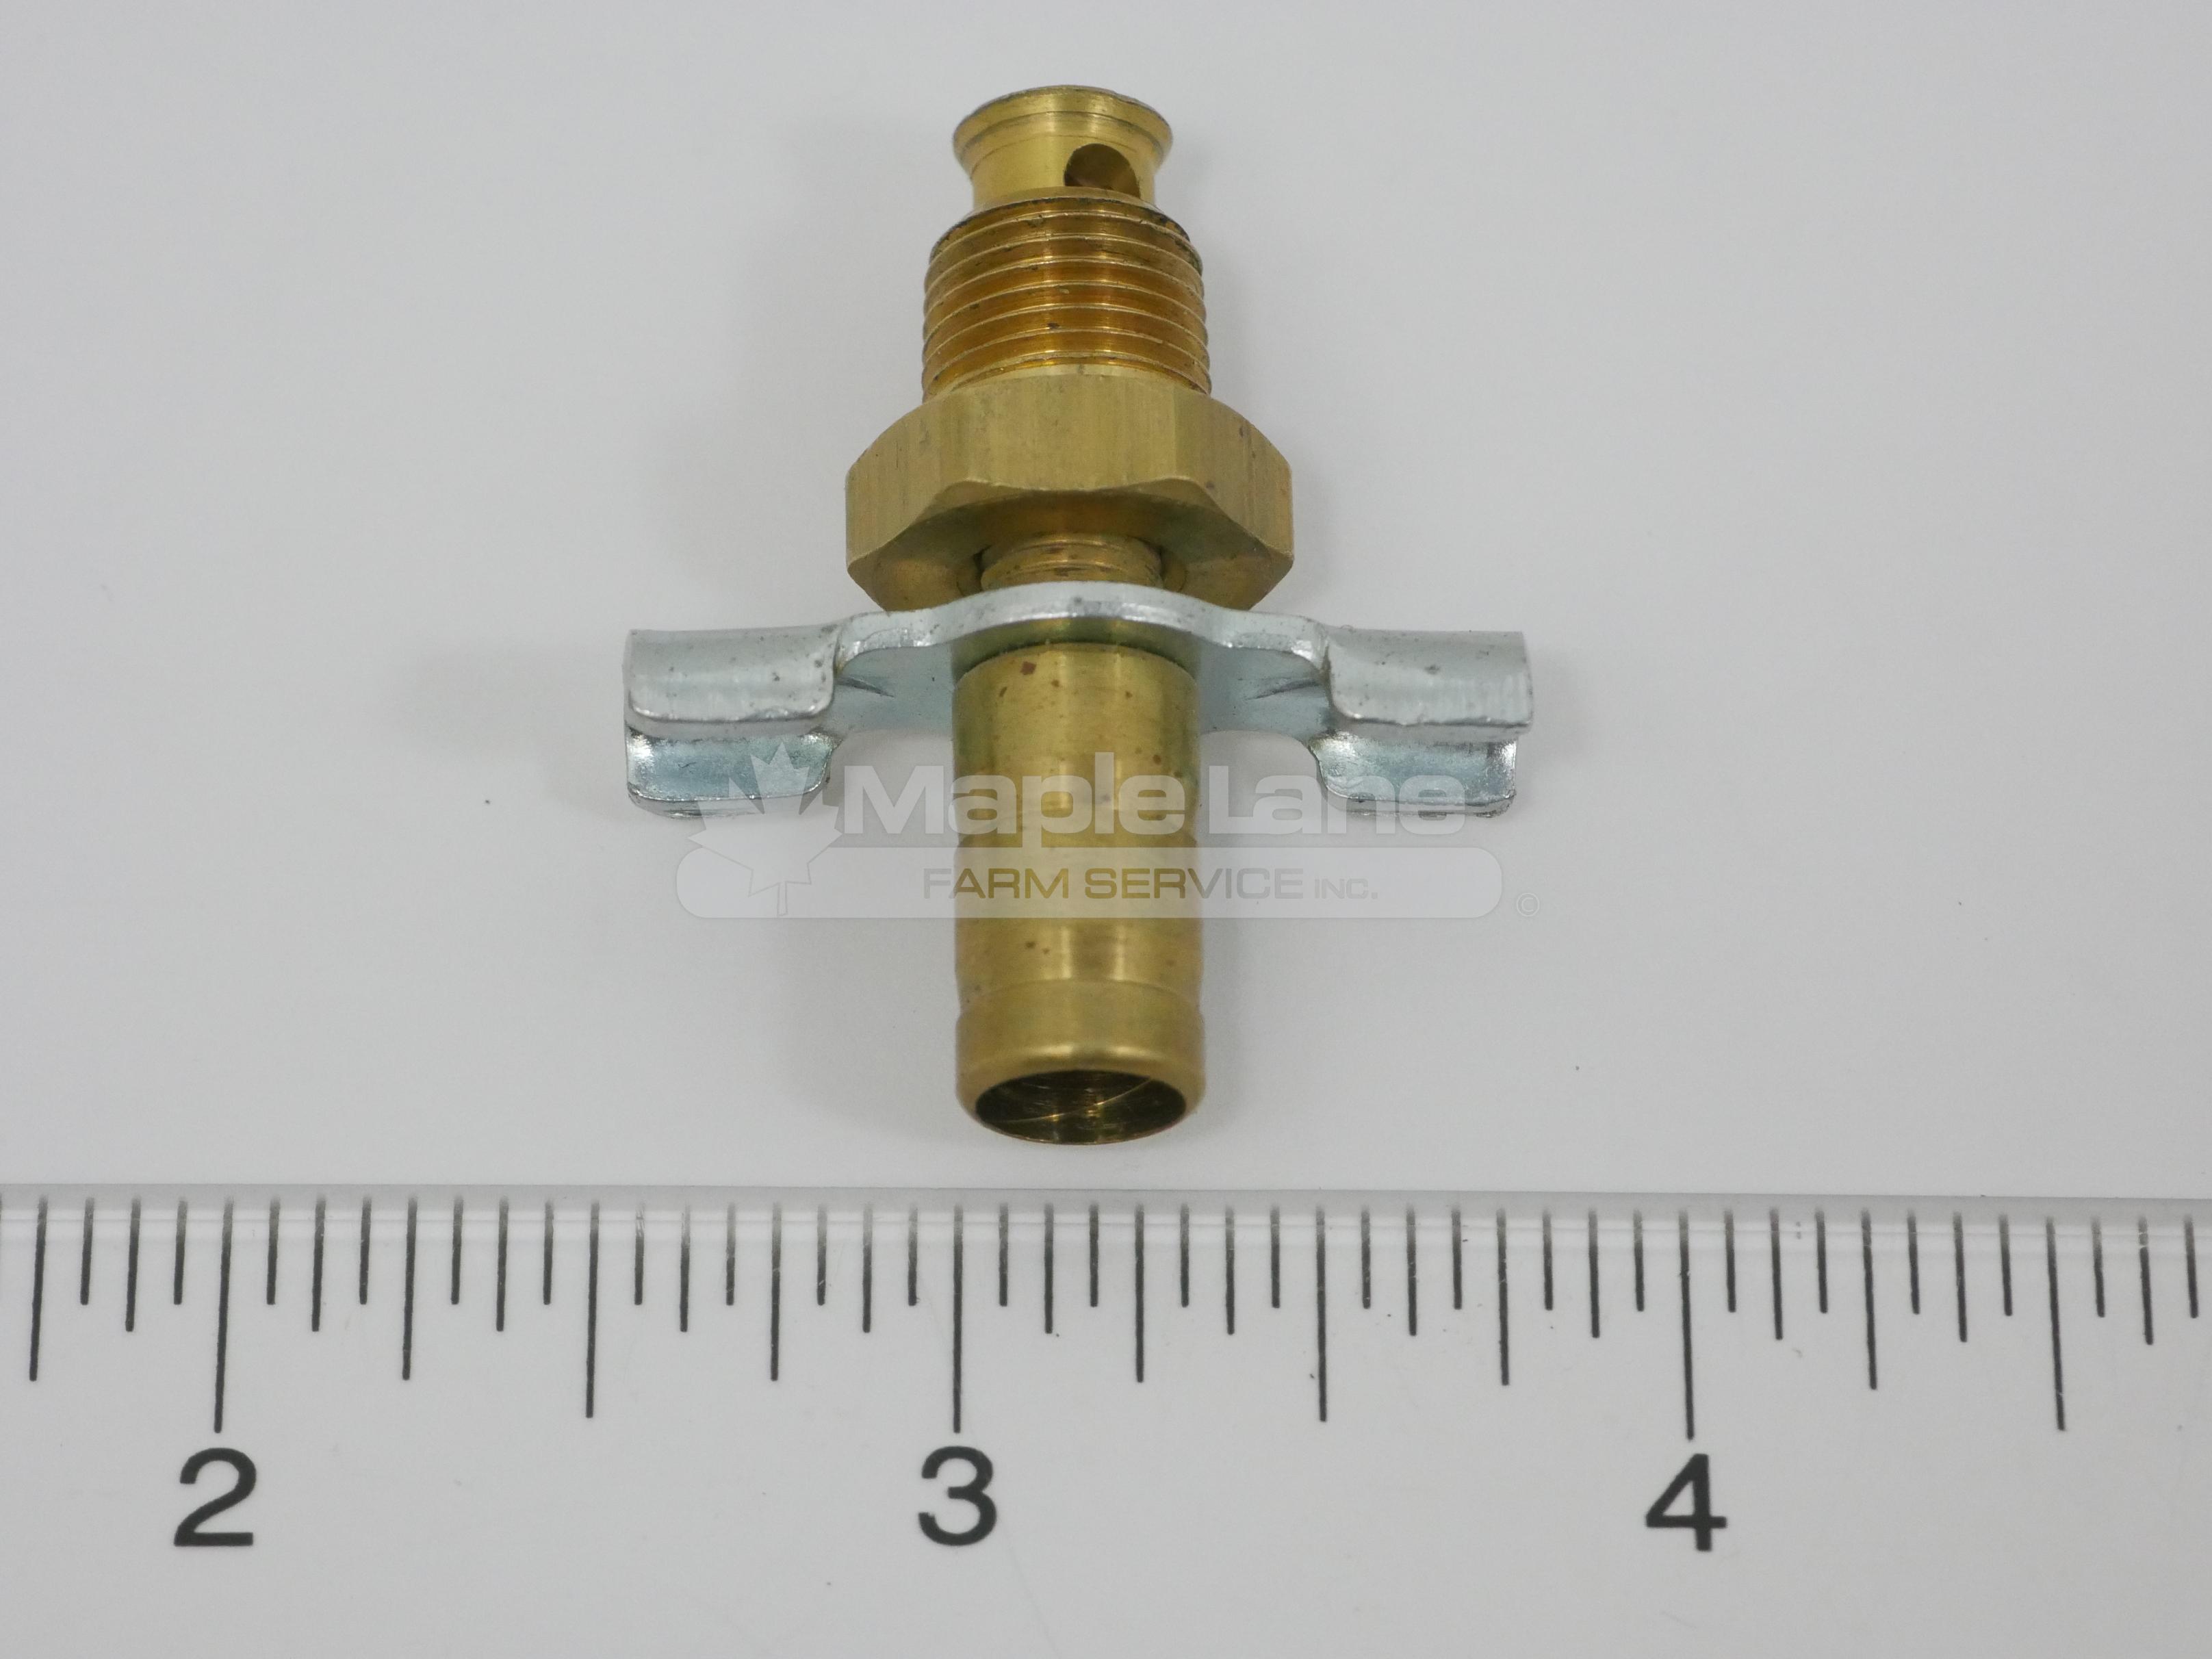 SPP239-18 1/8" Brass Drain